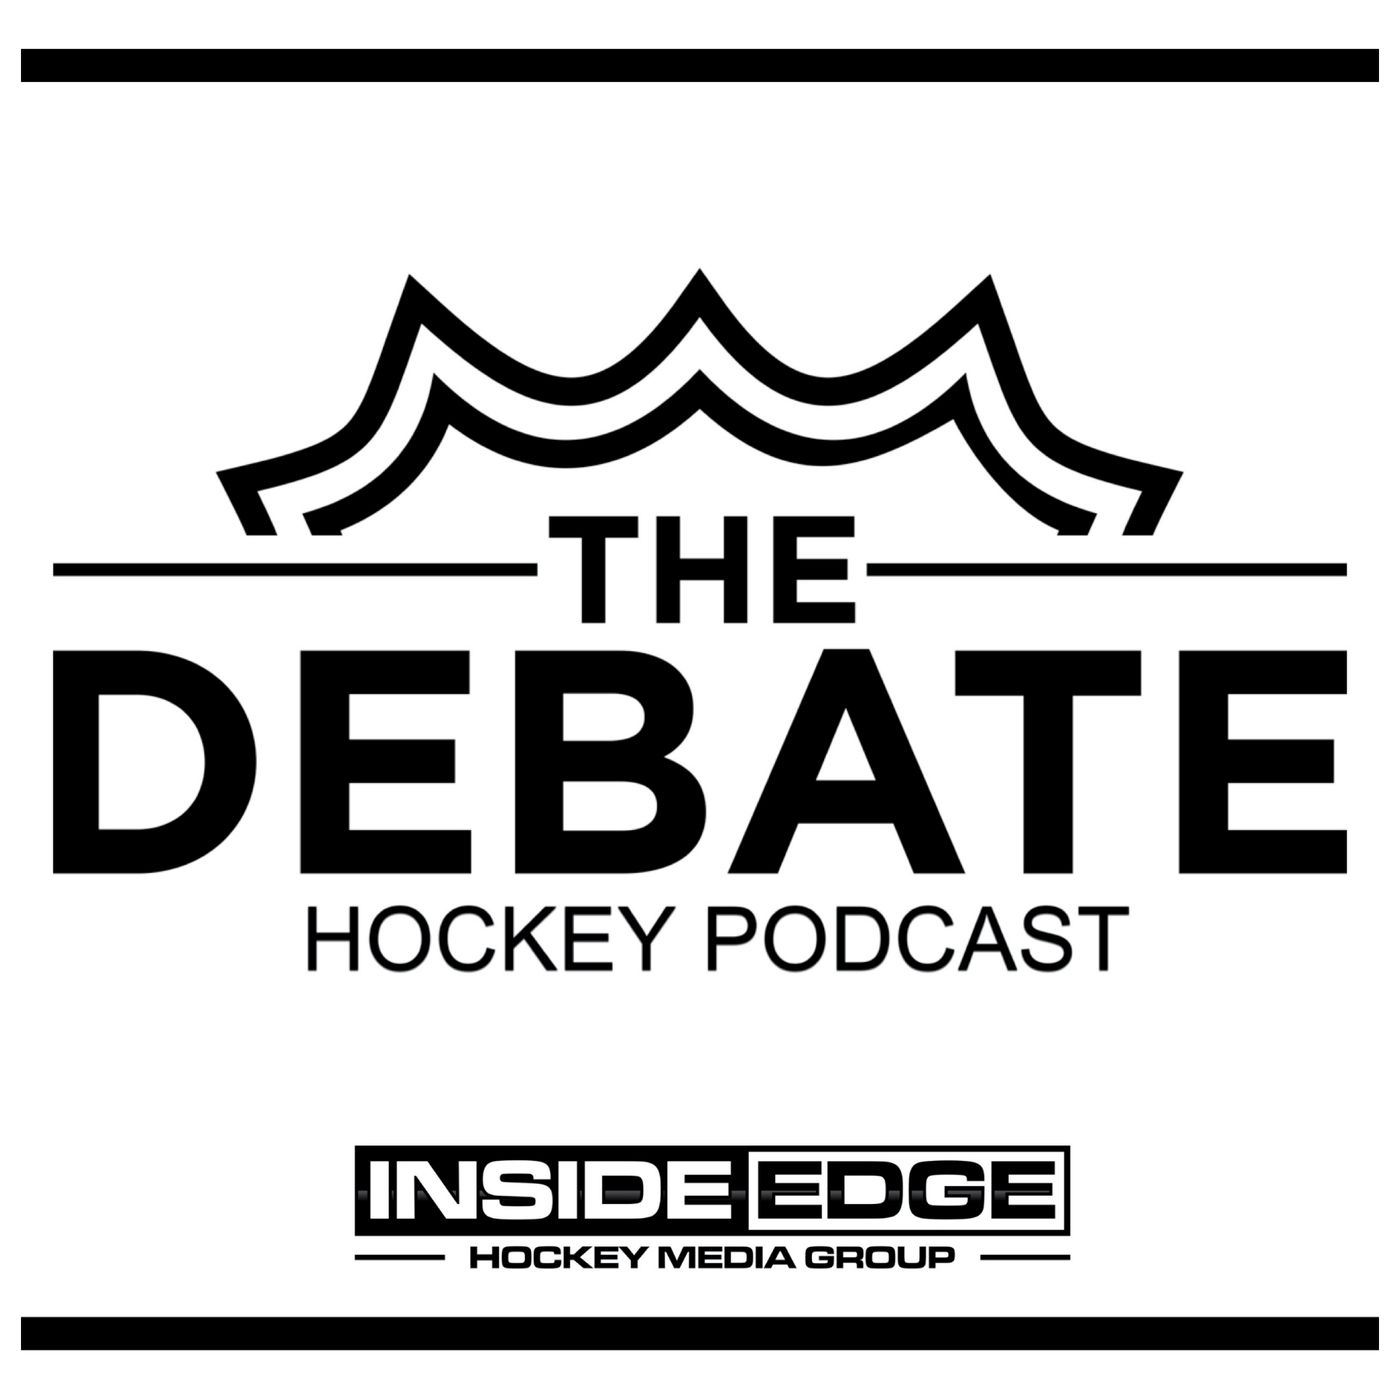 THE DEBATE - Hockey Podcast – Episode 202 – Midseason Struggles